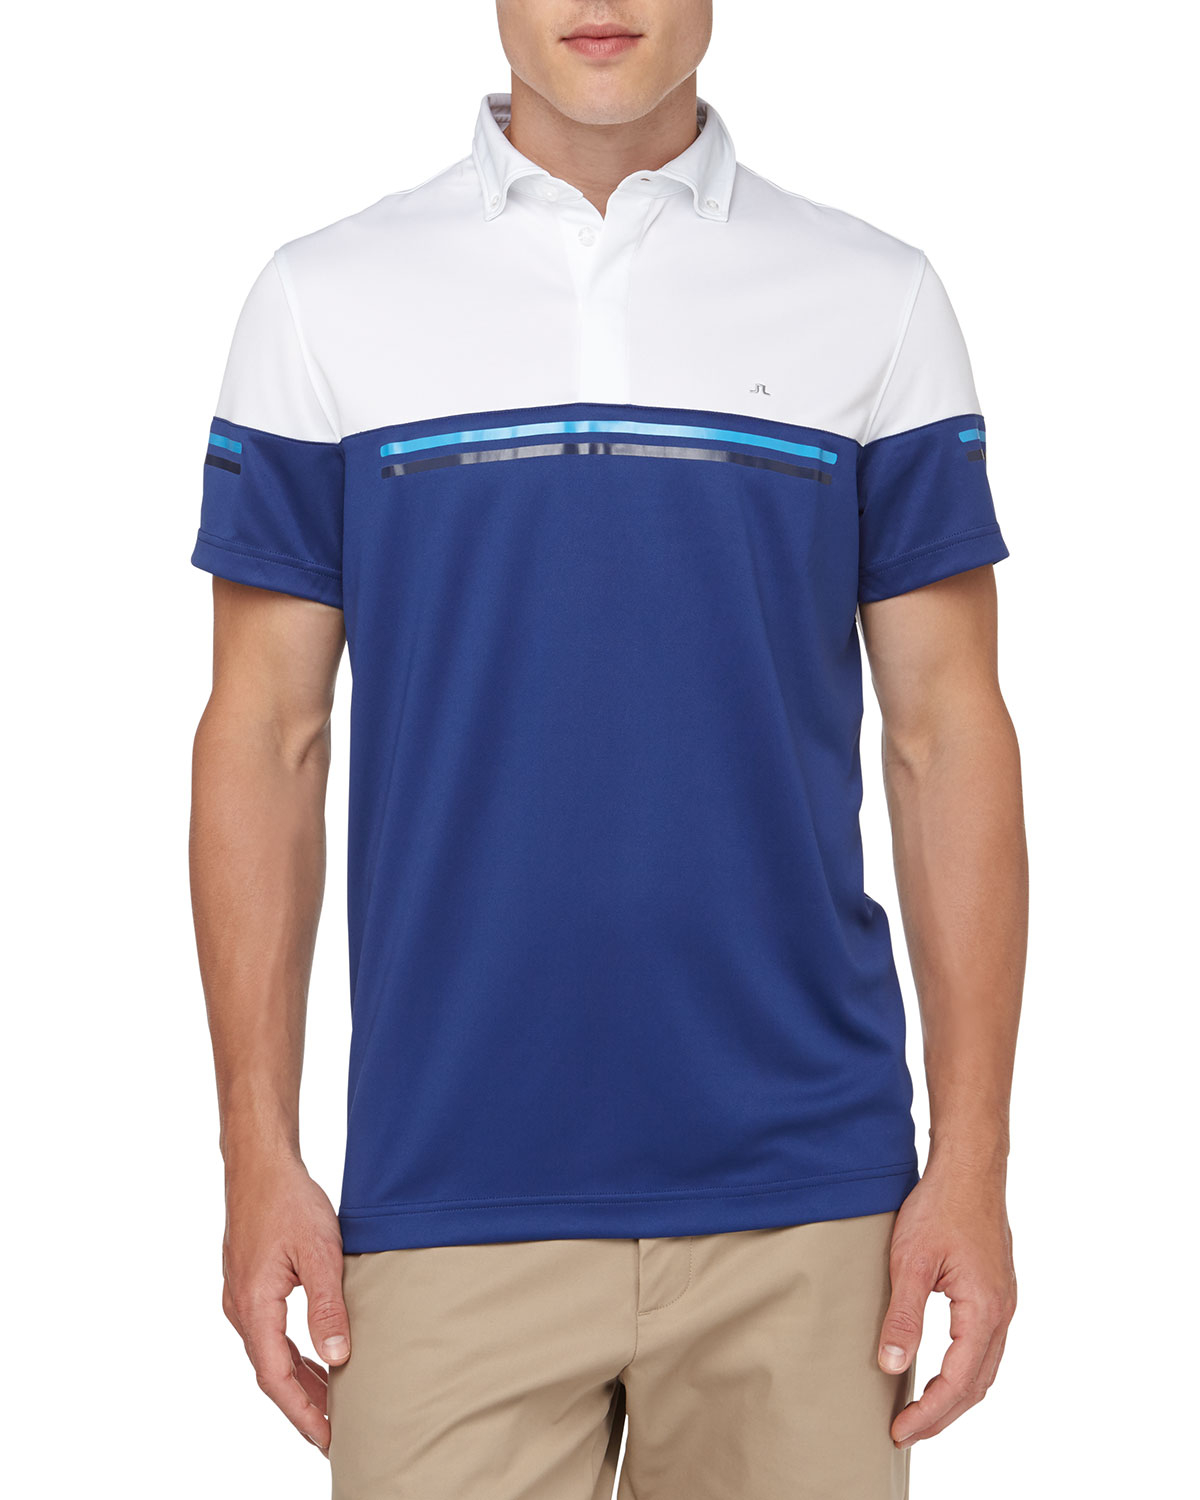 Lyst - J.Lindeberg Alessandro Reg Fieldsensor 2 Golf Shirt in Blue for Men